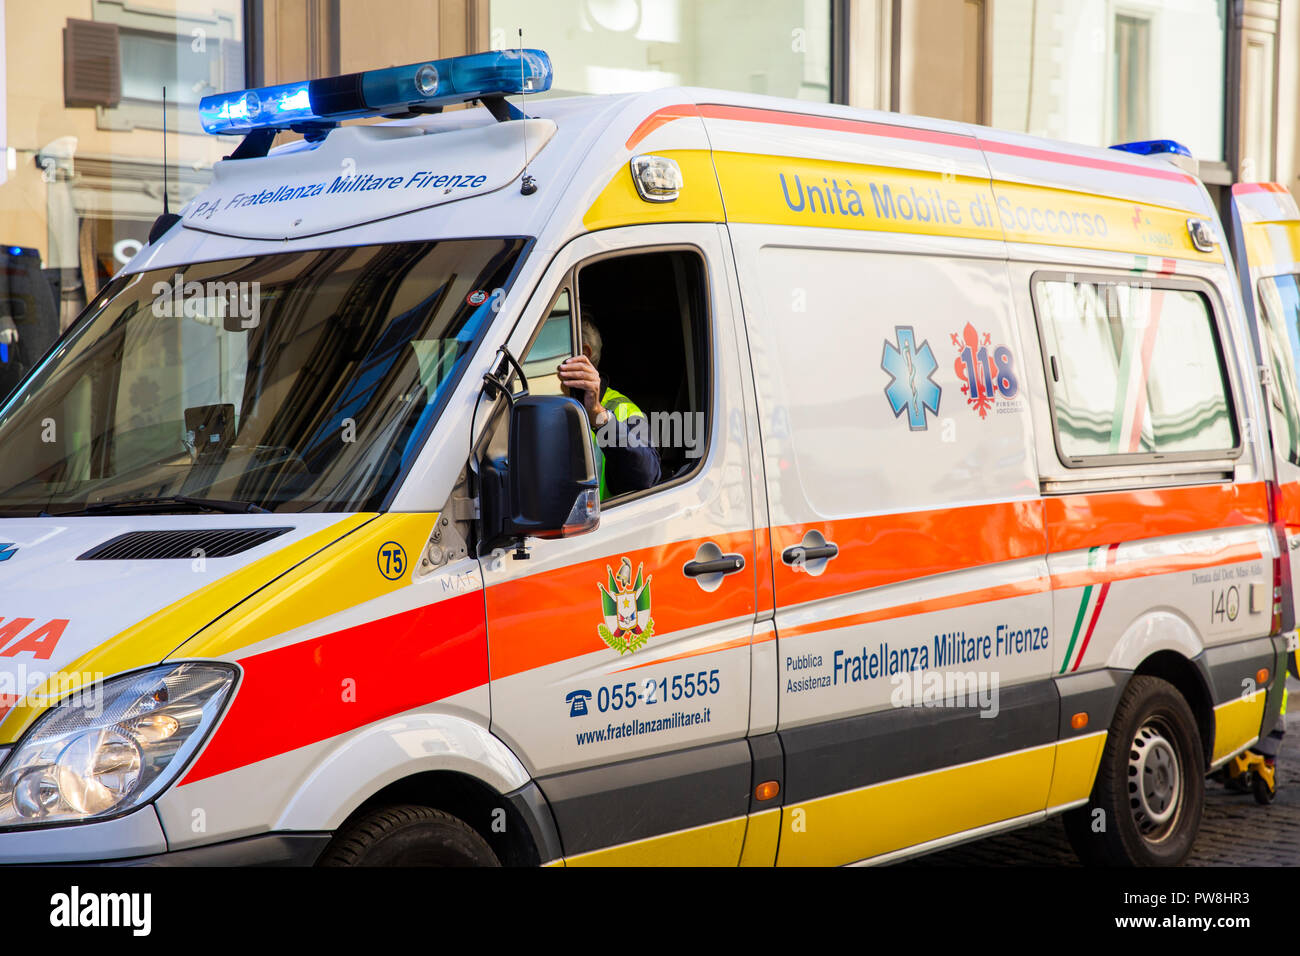 Italienischer krankenwagen -Fotos und -Bildmaterial in hoher